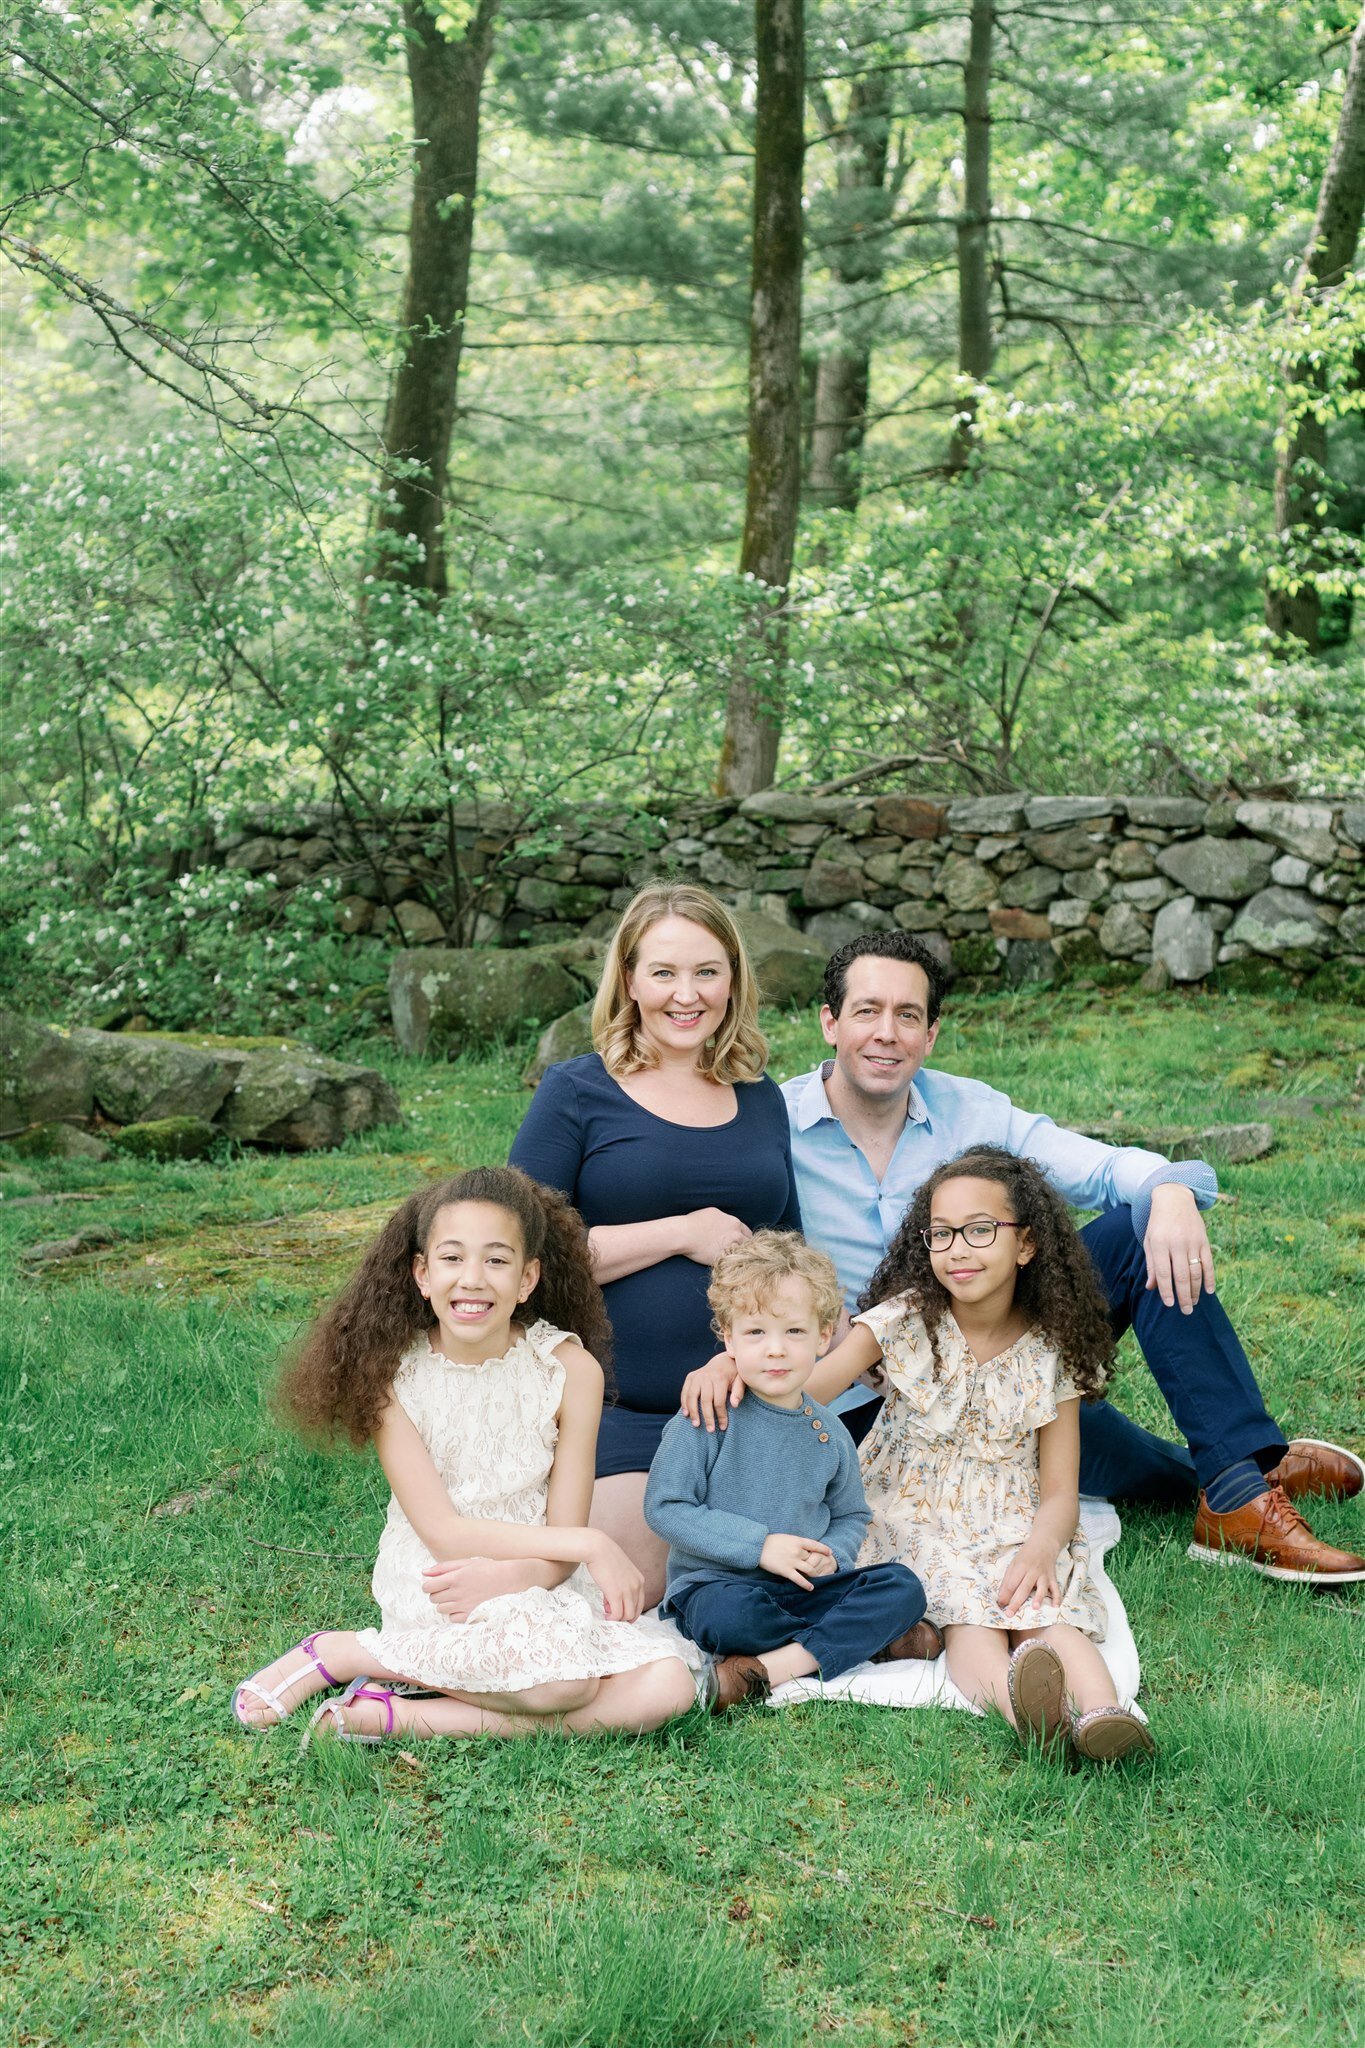  New Jersey Family Portraits. Navy and Neutral Family Photo. 